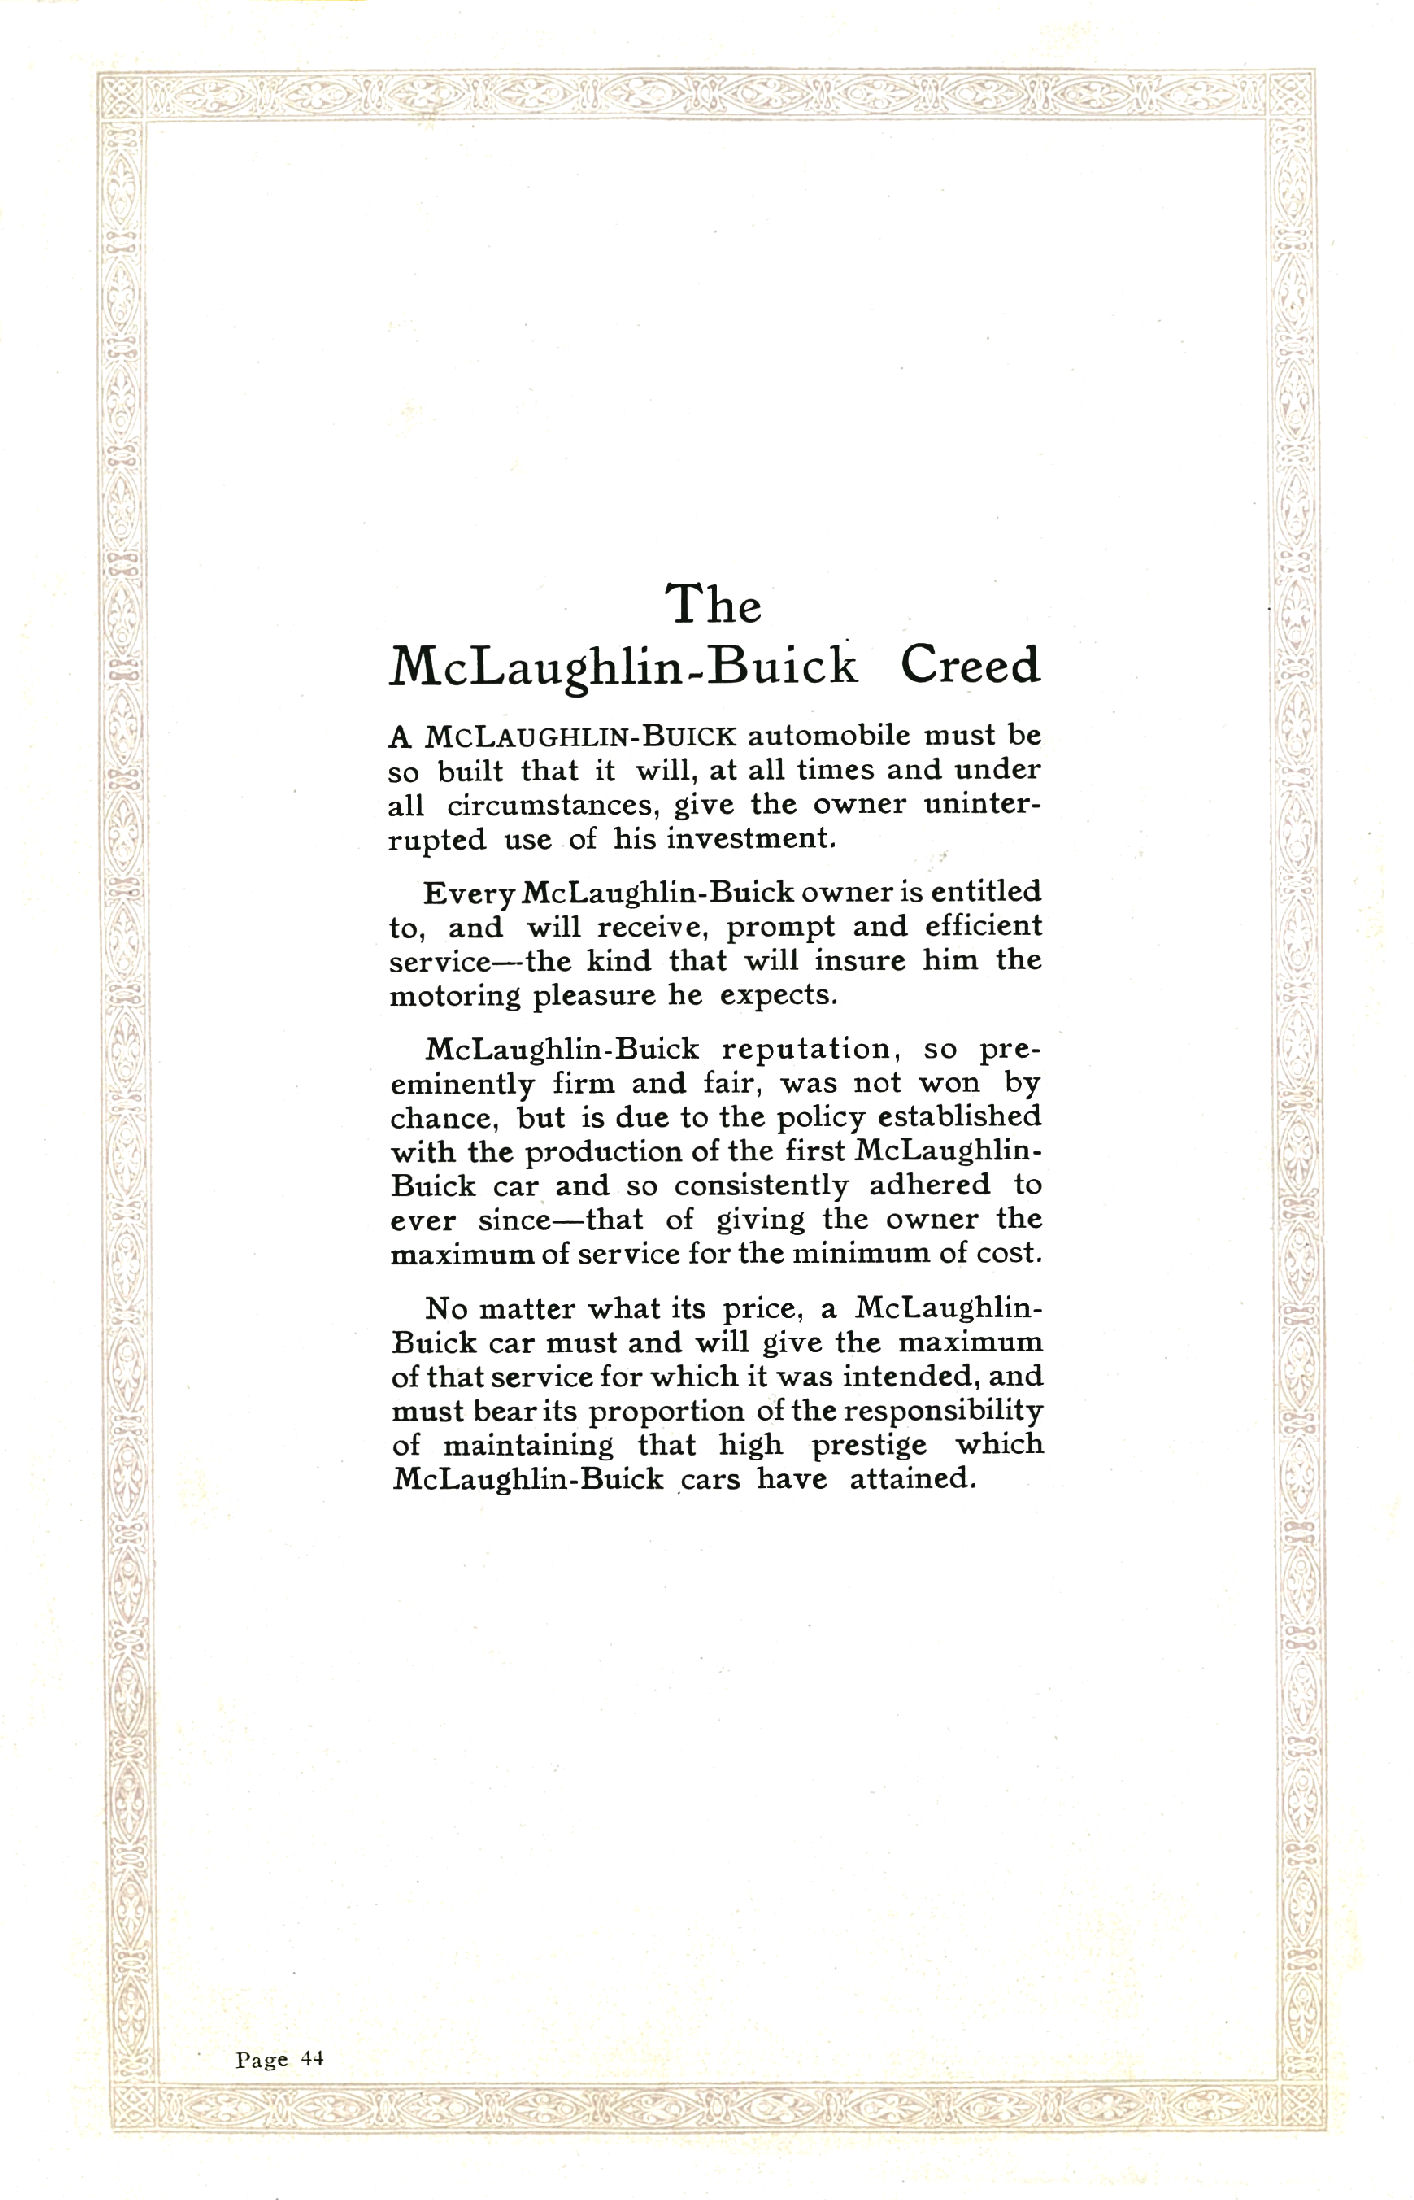 1922 McLaughlin Buick Booklet-44